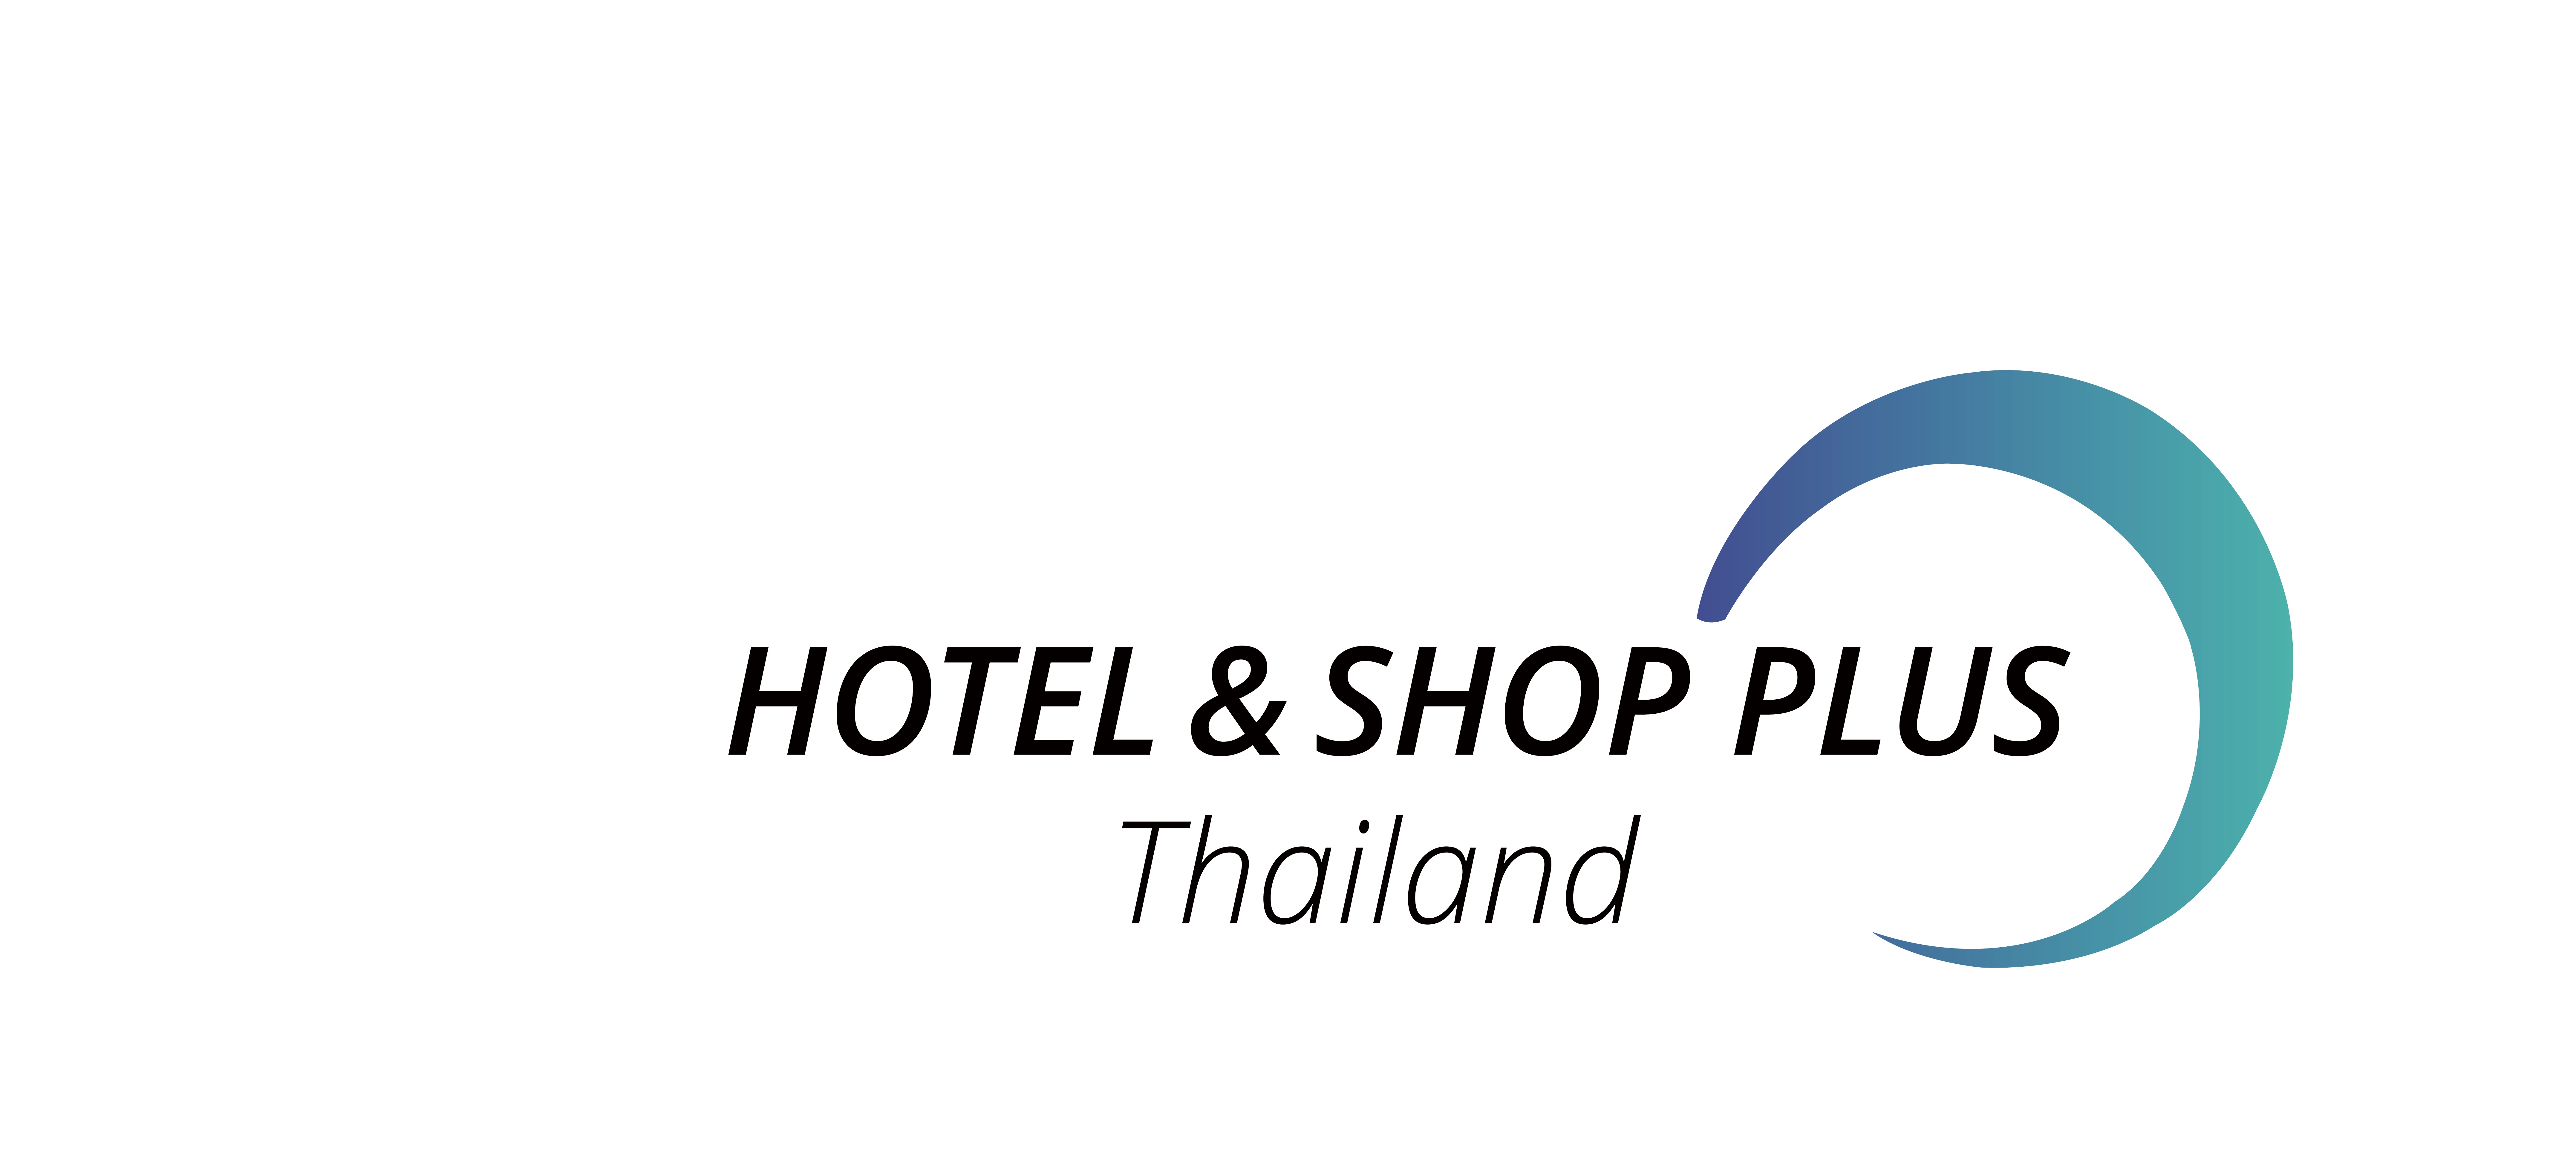 Hotel & Shop Plus Thailand